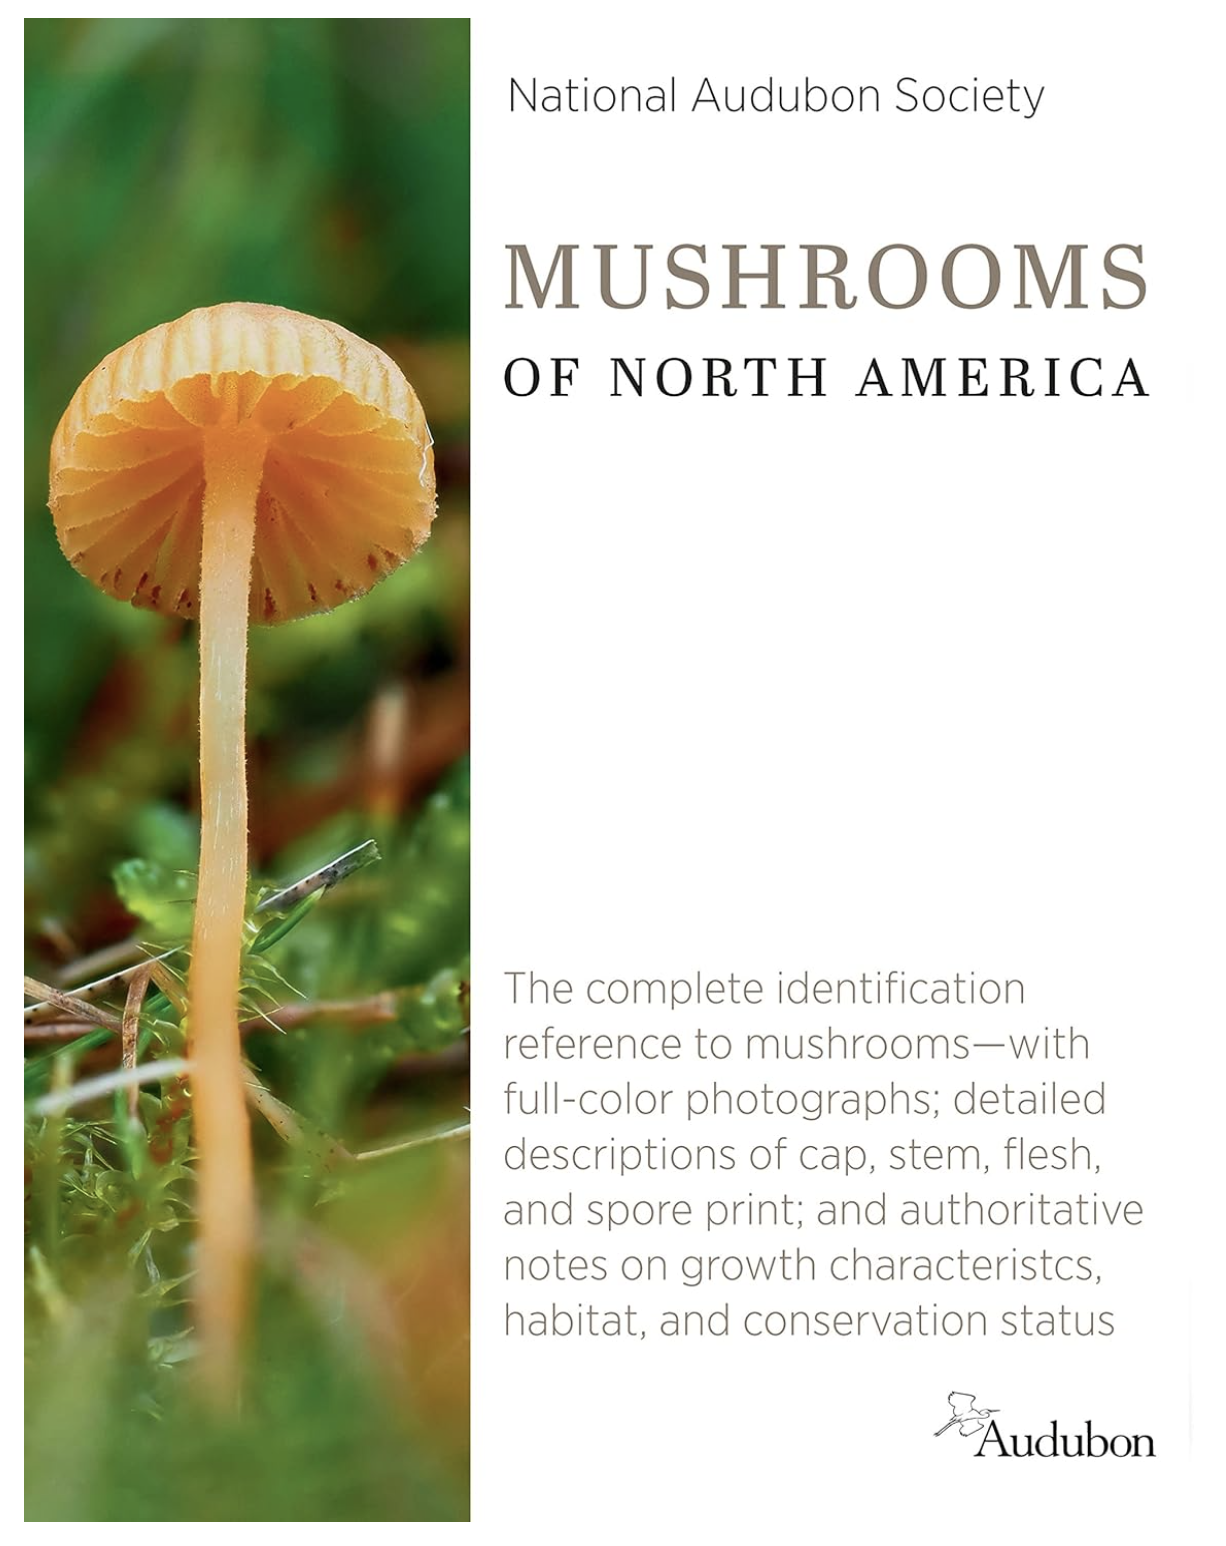 National Audubon Society: Mushrooms of North America